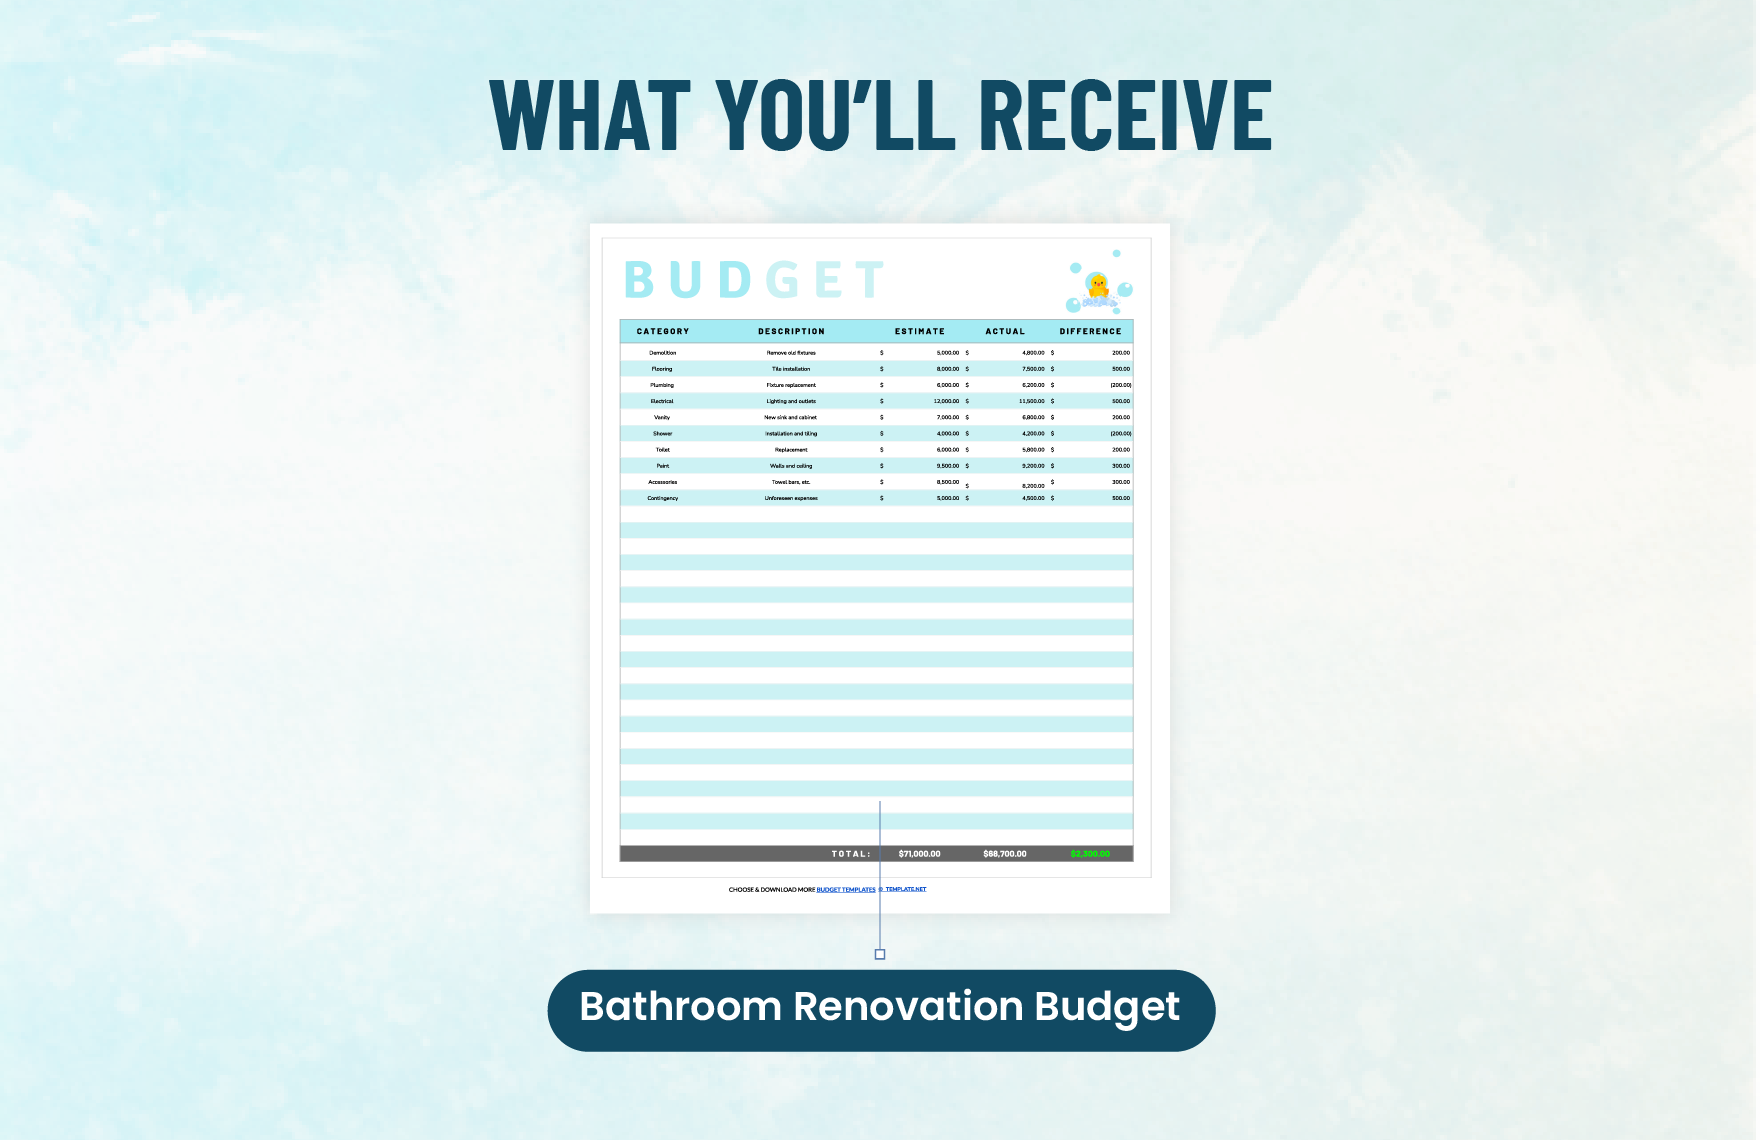 Bathroom Renovation Budget Template